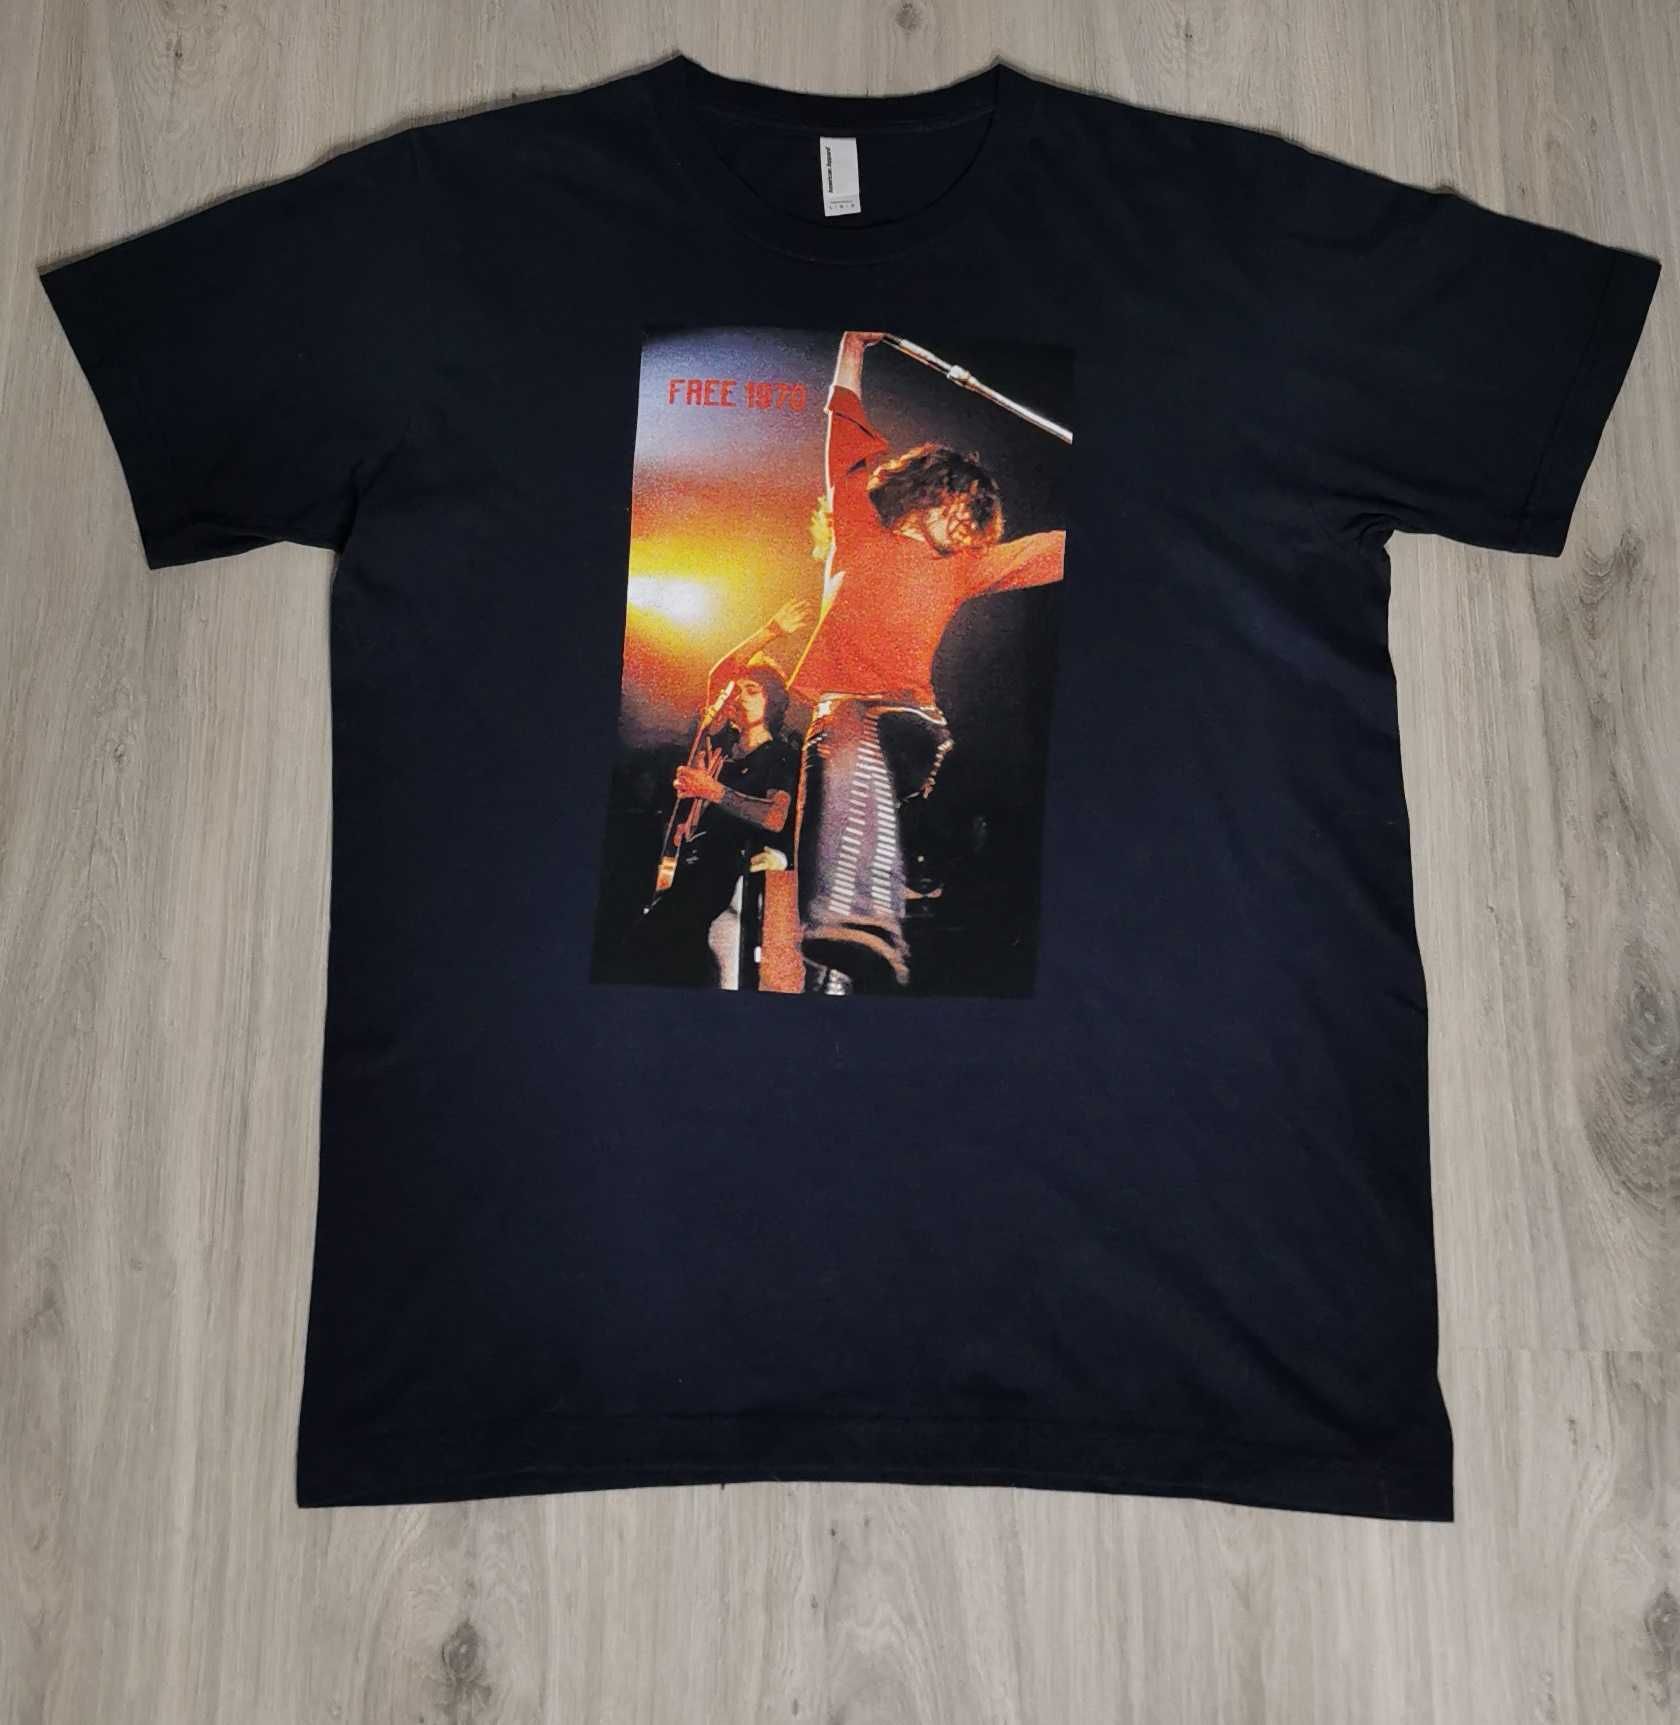 T-shirt koszulka zespół Free big print unisex rozmiar L/XL